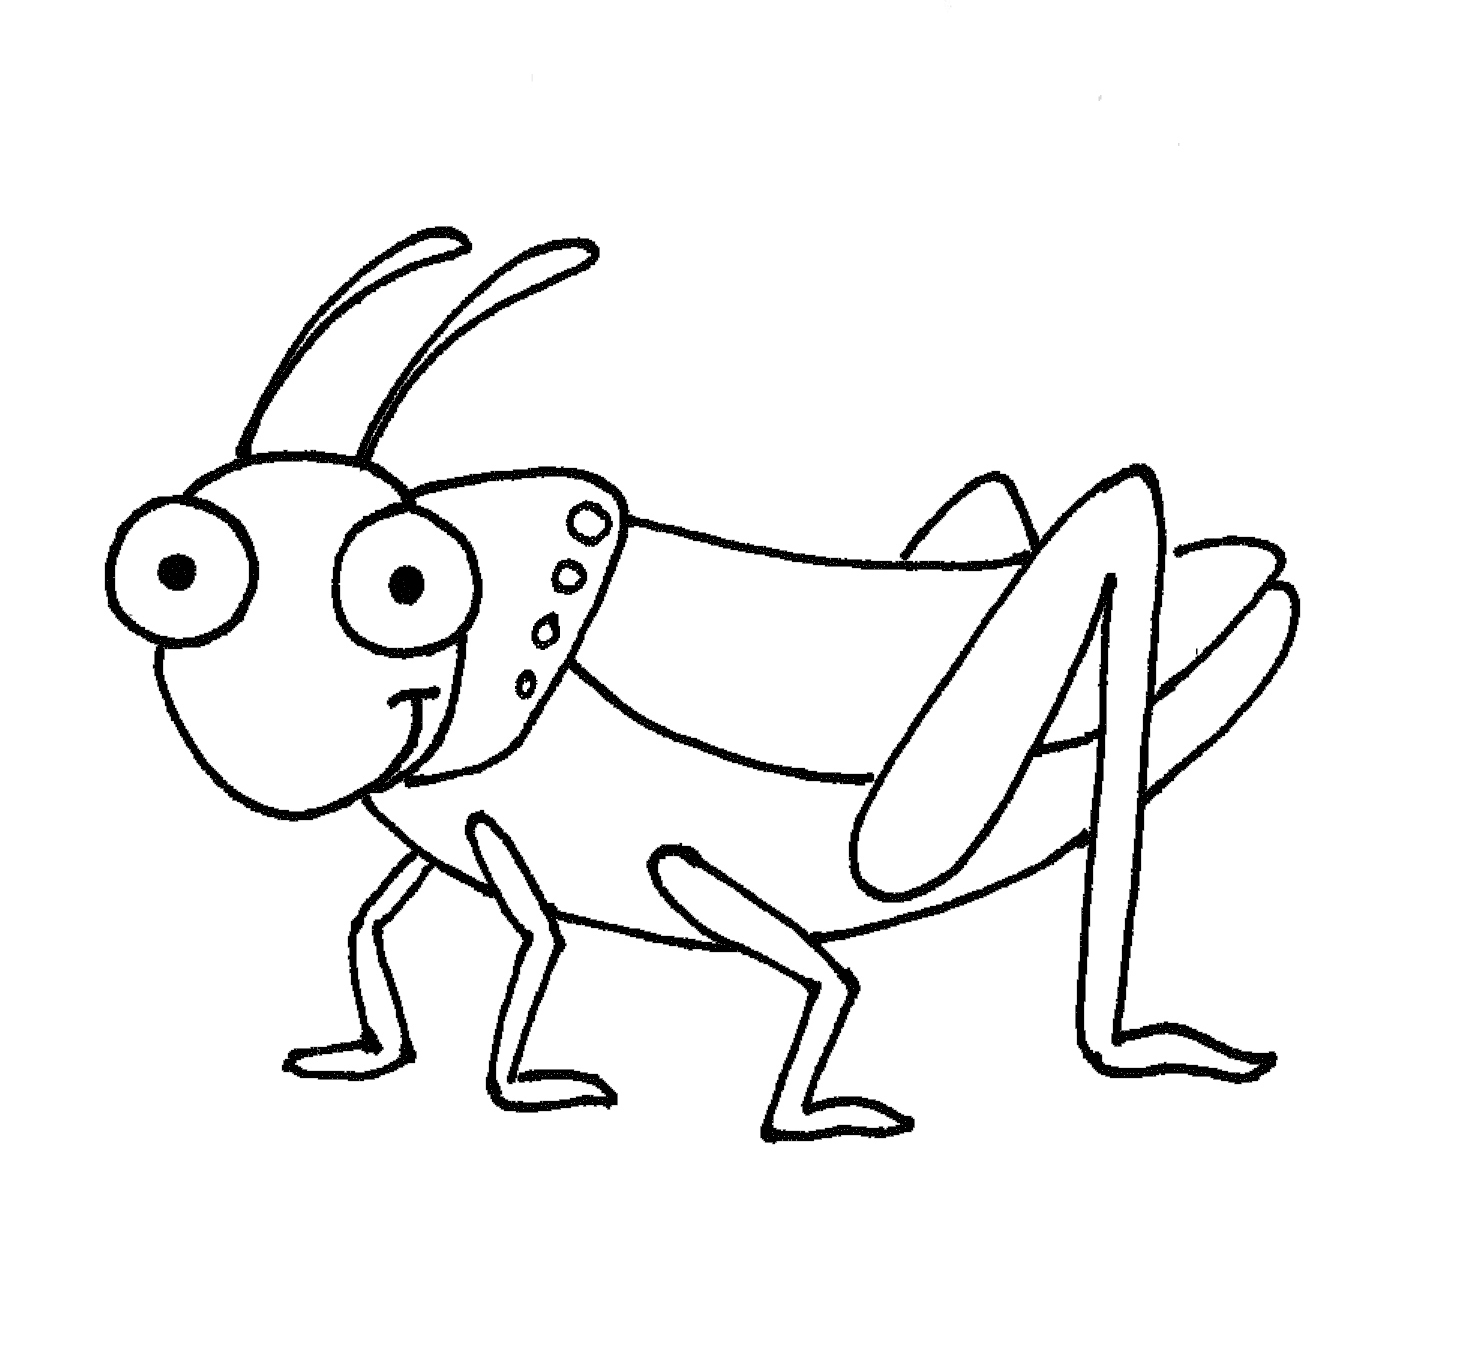 Grasshopper Drawing